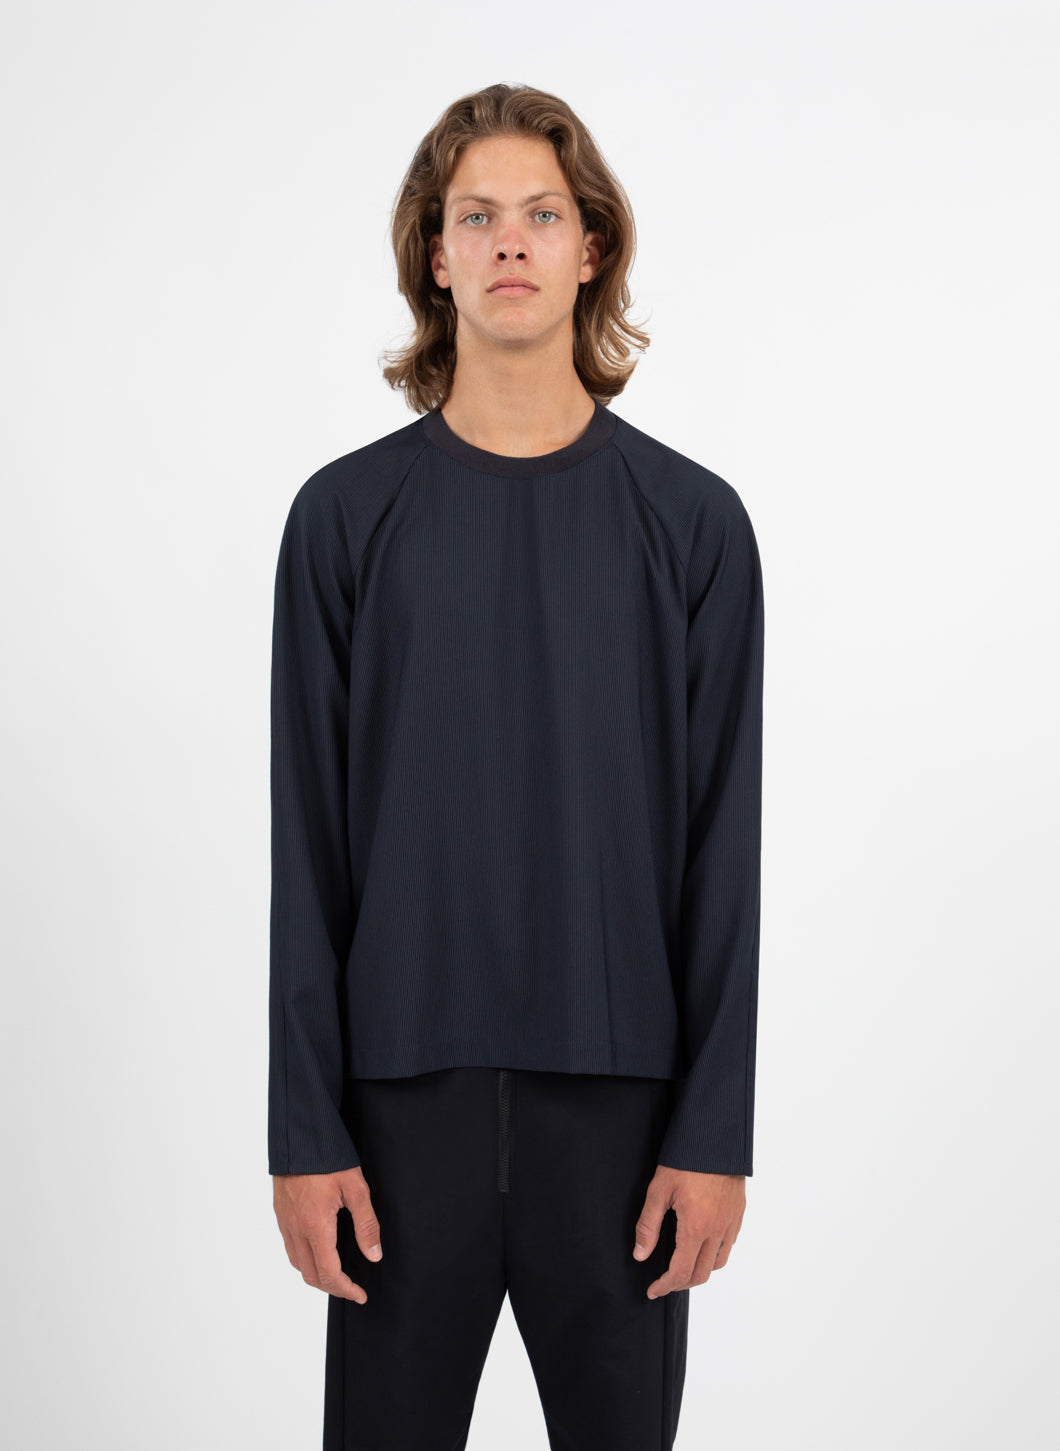 Raglan Sleeve T-Shirt in Navy Fine Stripe Serge Fabric